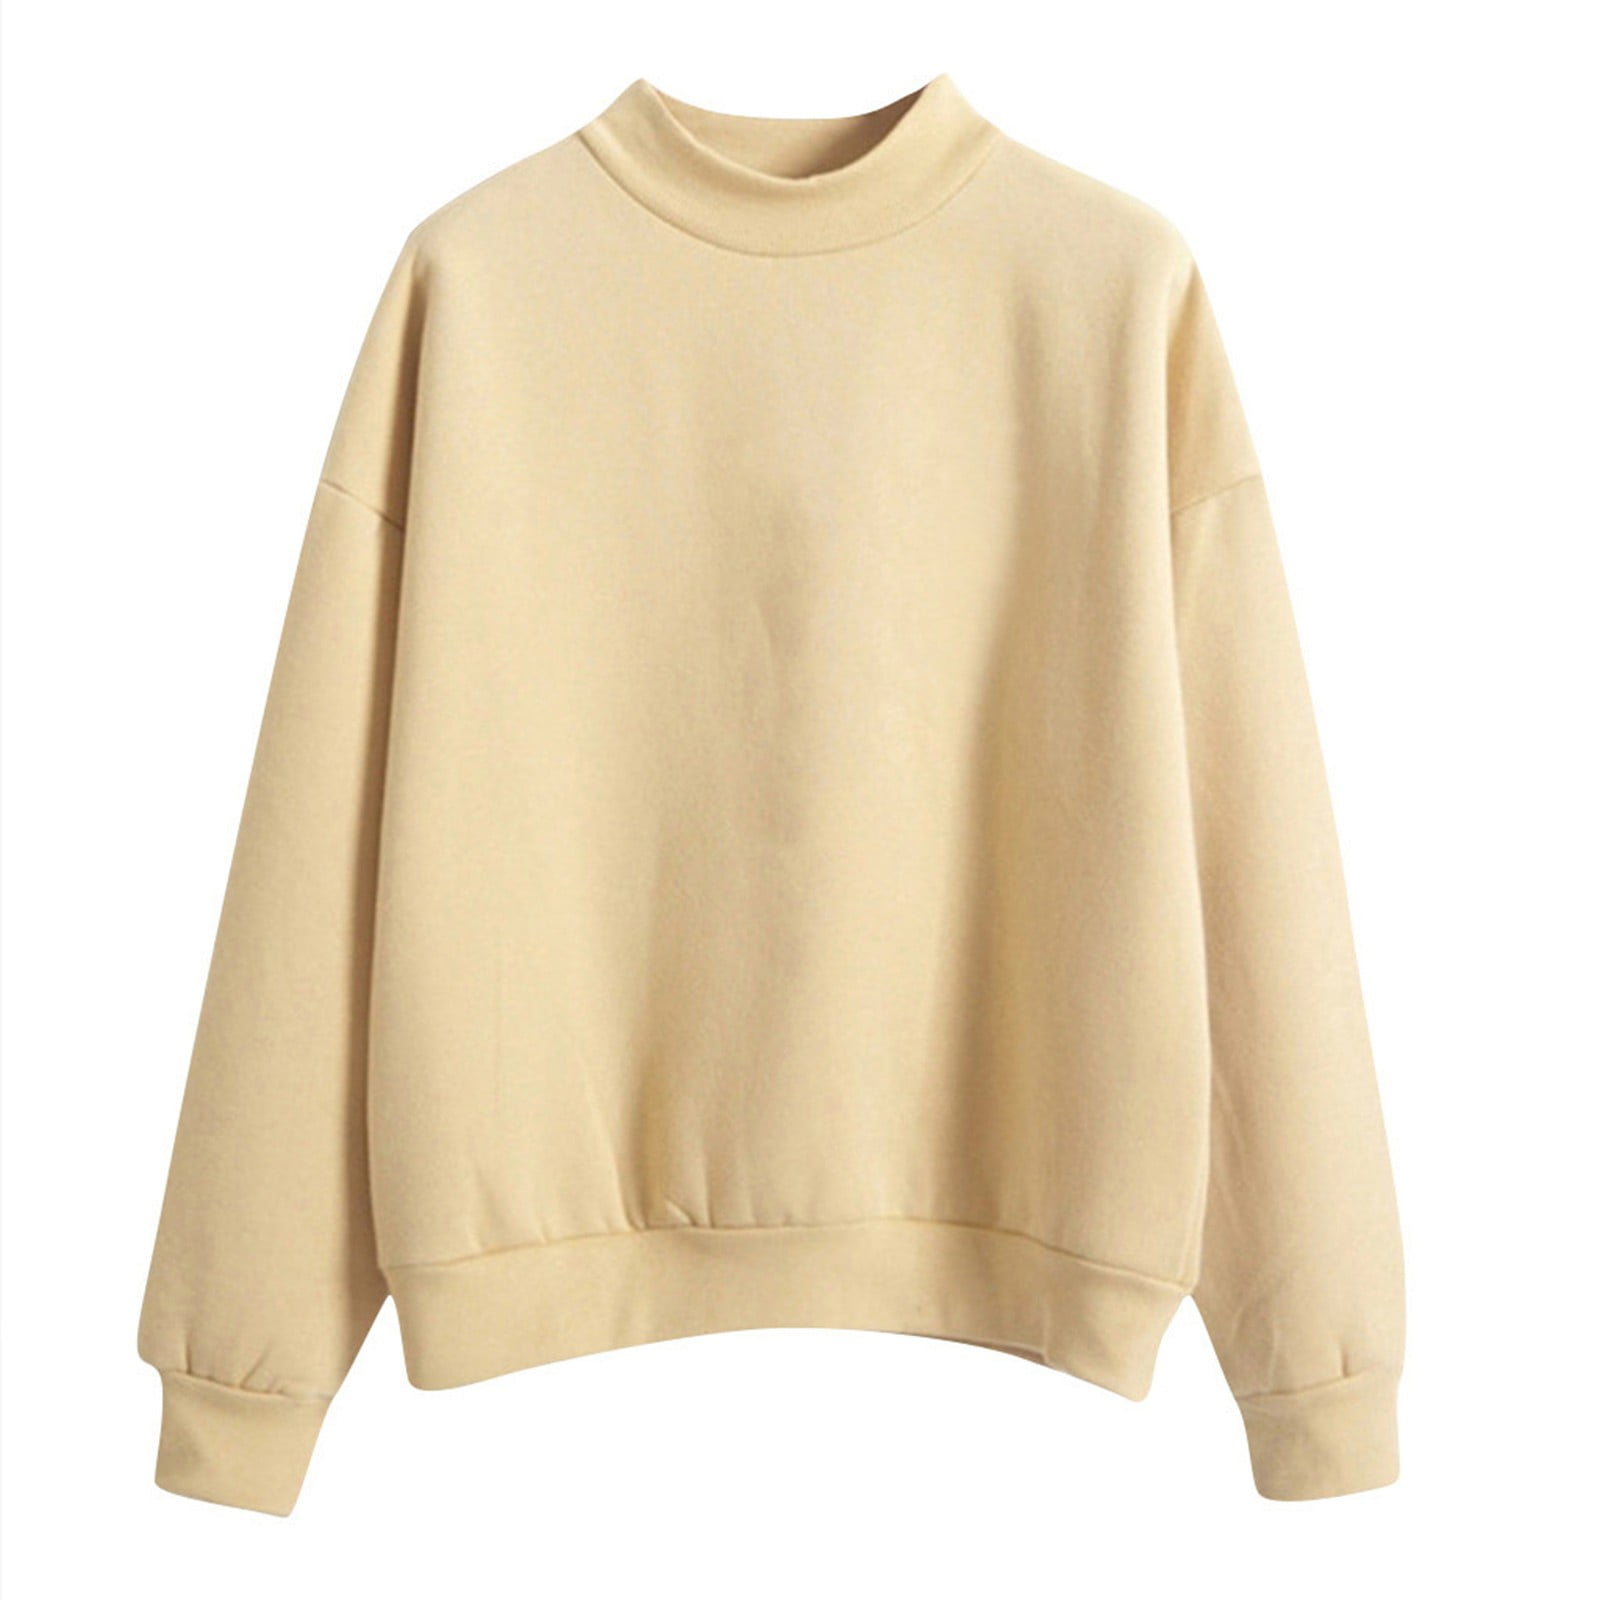 Crewneck Sweatshirts Women Plus Size O Neck Solid Color Pullover Long ...